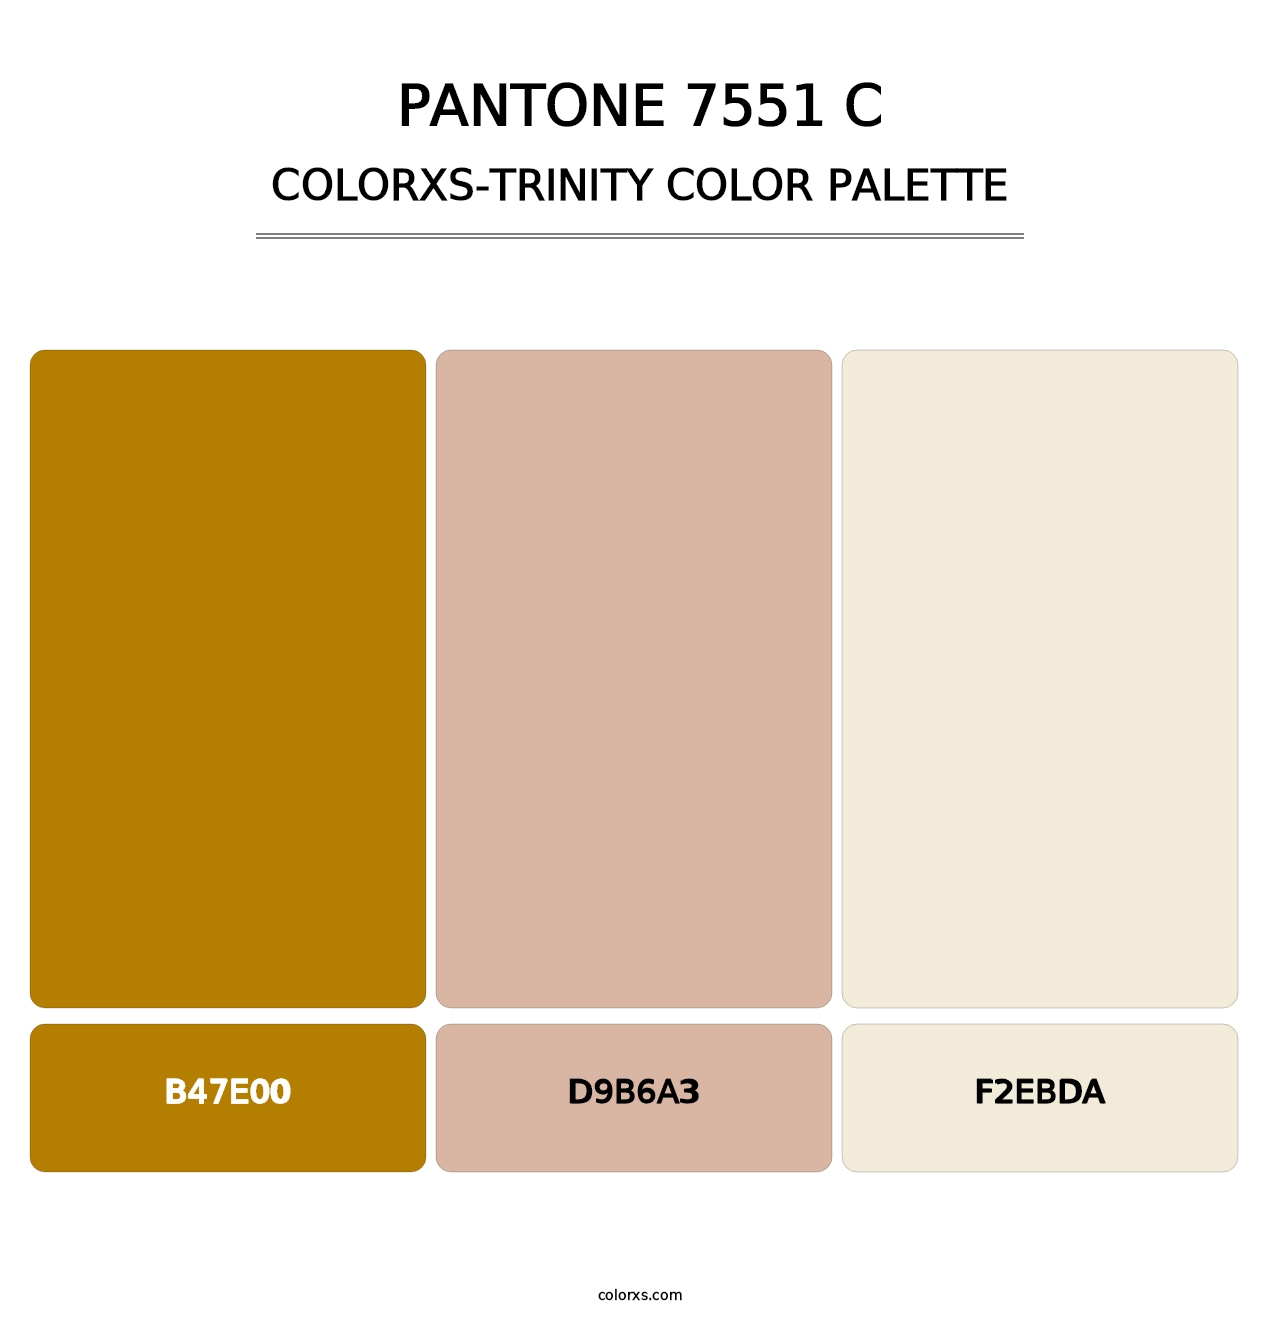 PANTONE 7551 C - Colorxs Trinity Palette